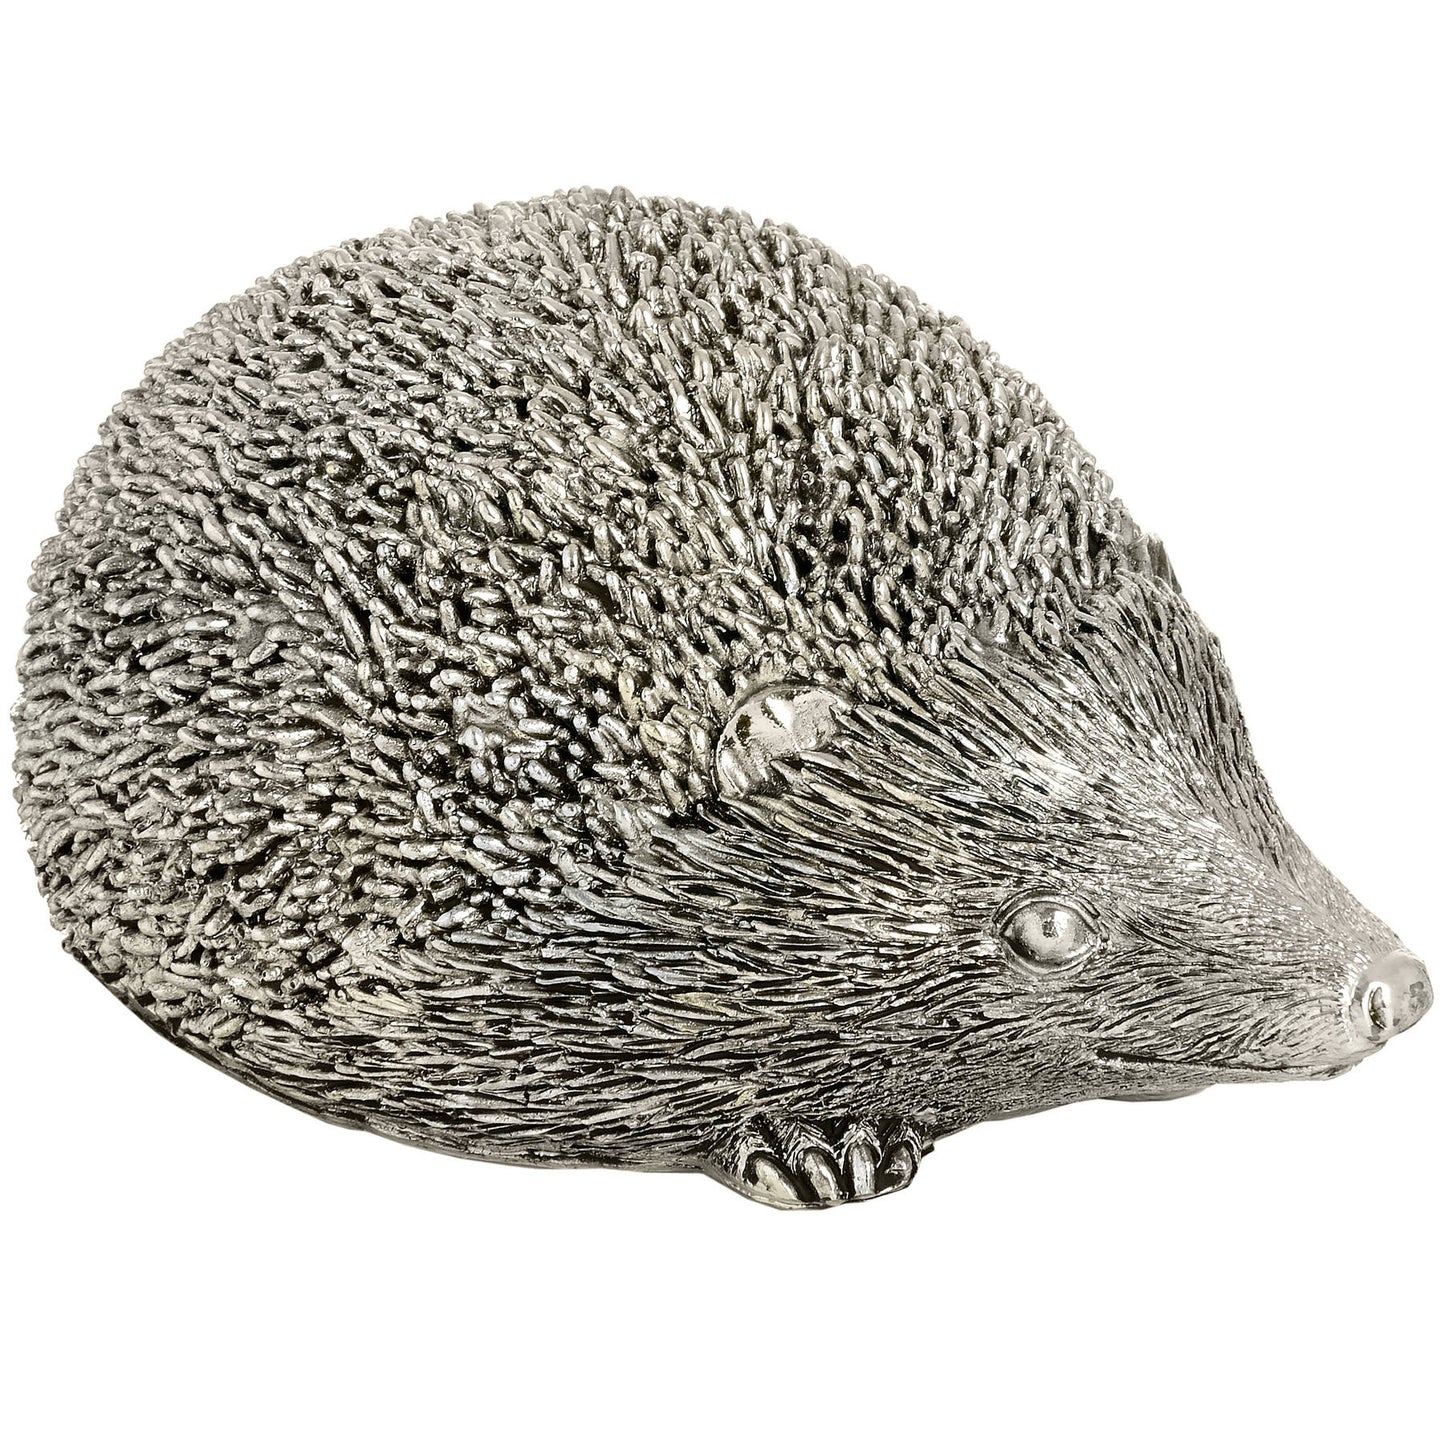 Henrietta The Silver Hedgehog